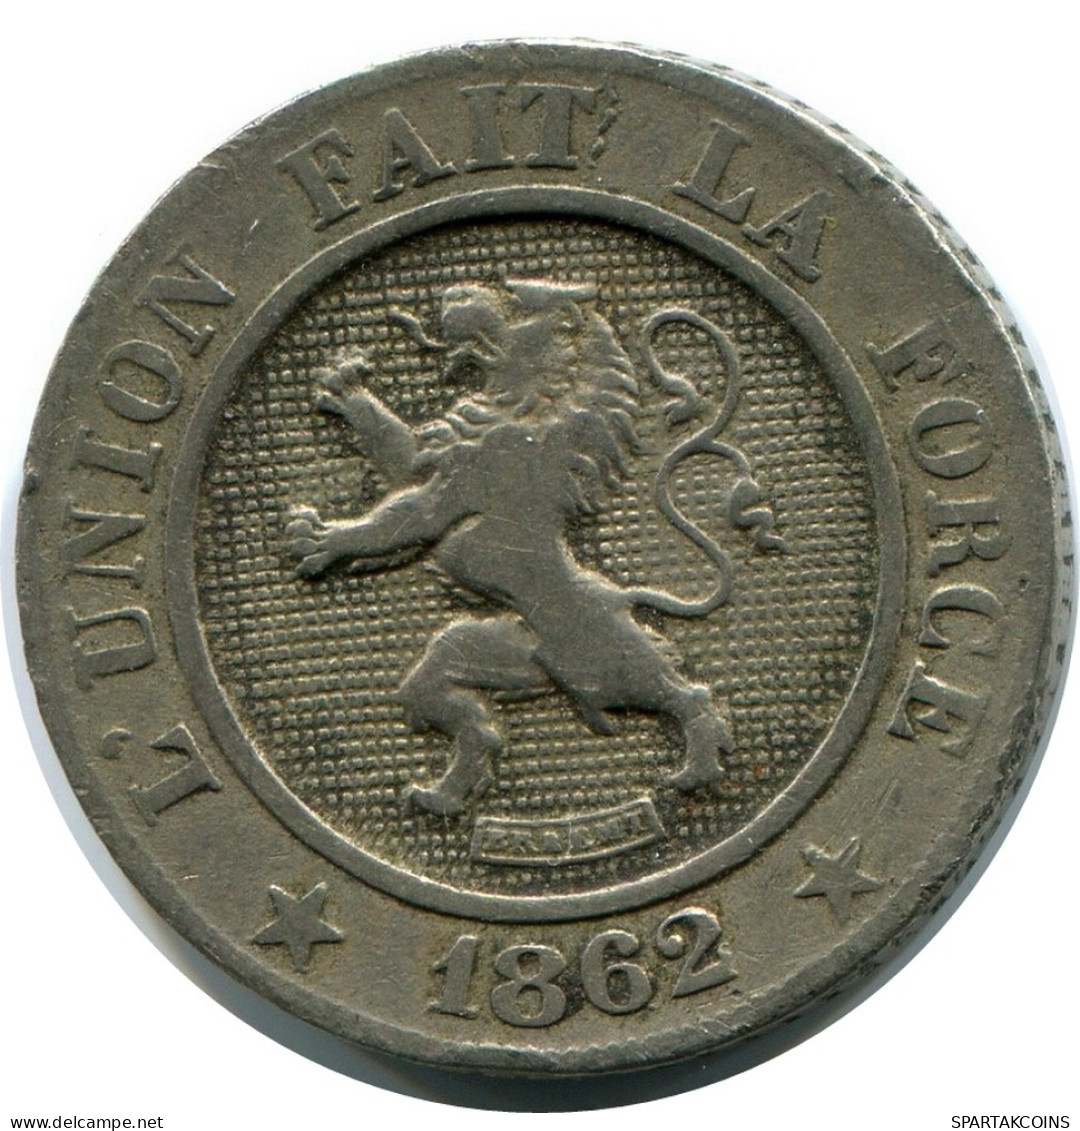 10 CENTIMES 1862 DUTCH Text BELGIUM Coin #AX364.U - 10 Centimes